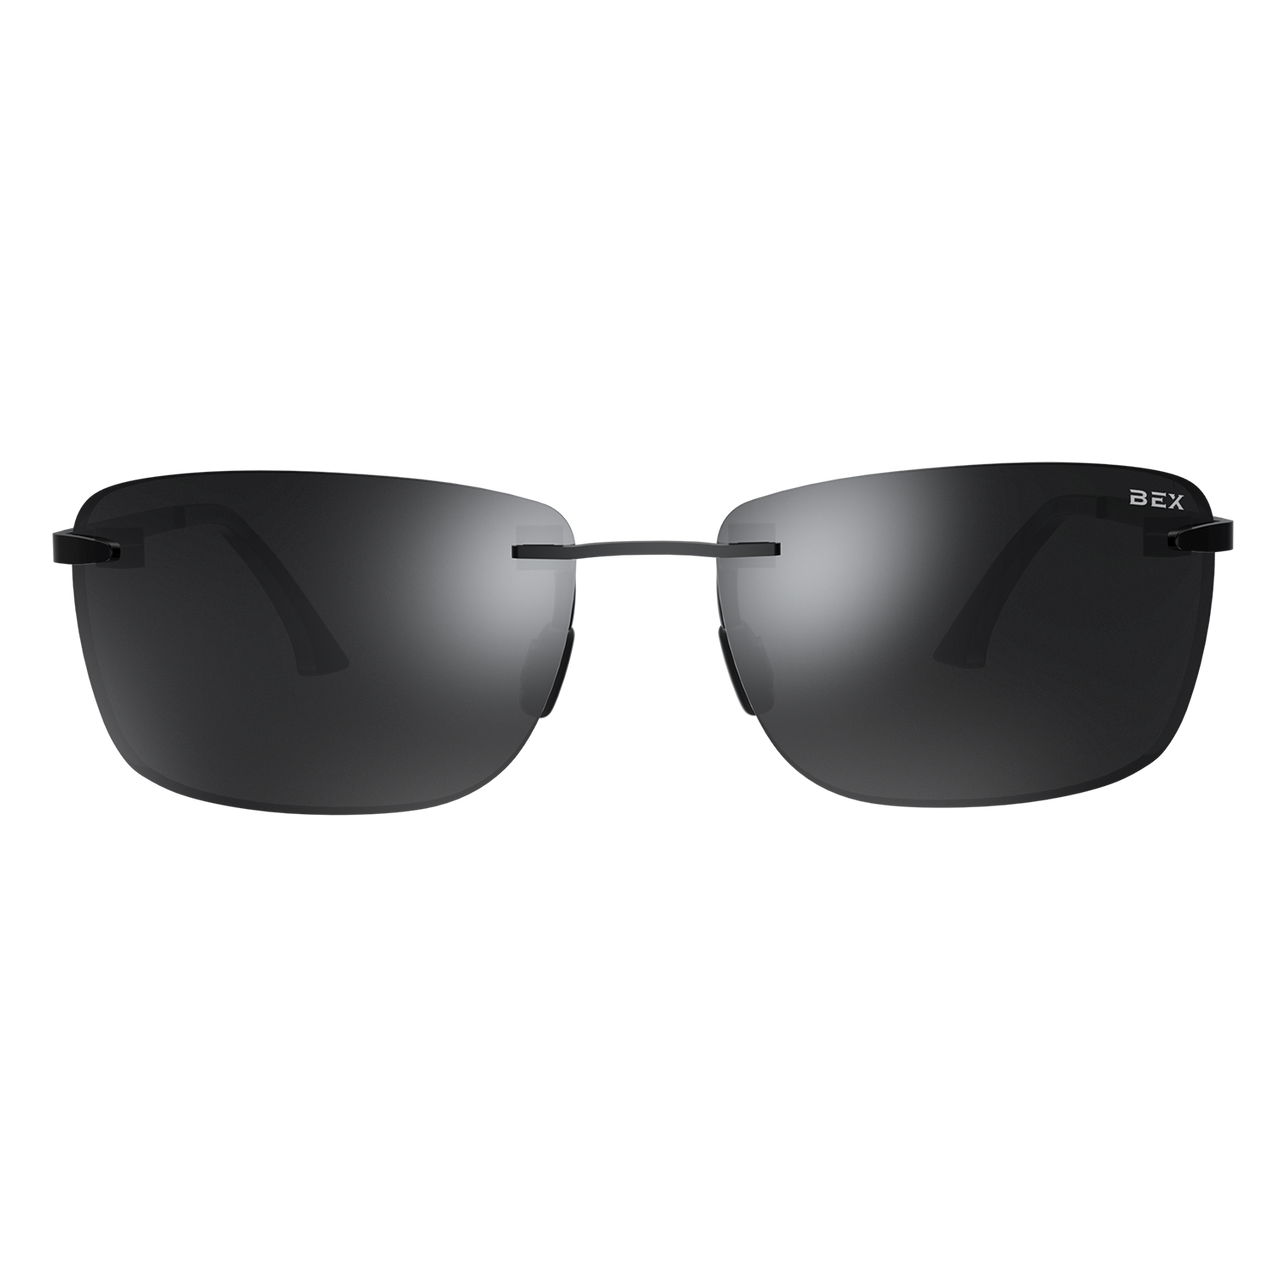 Bex Legolas Sunglasses - Black/Gray (Silver Flash)